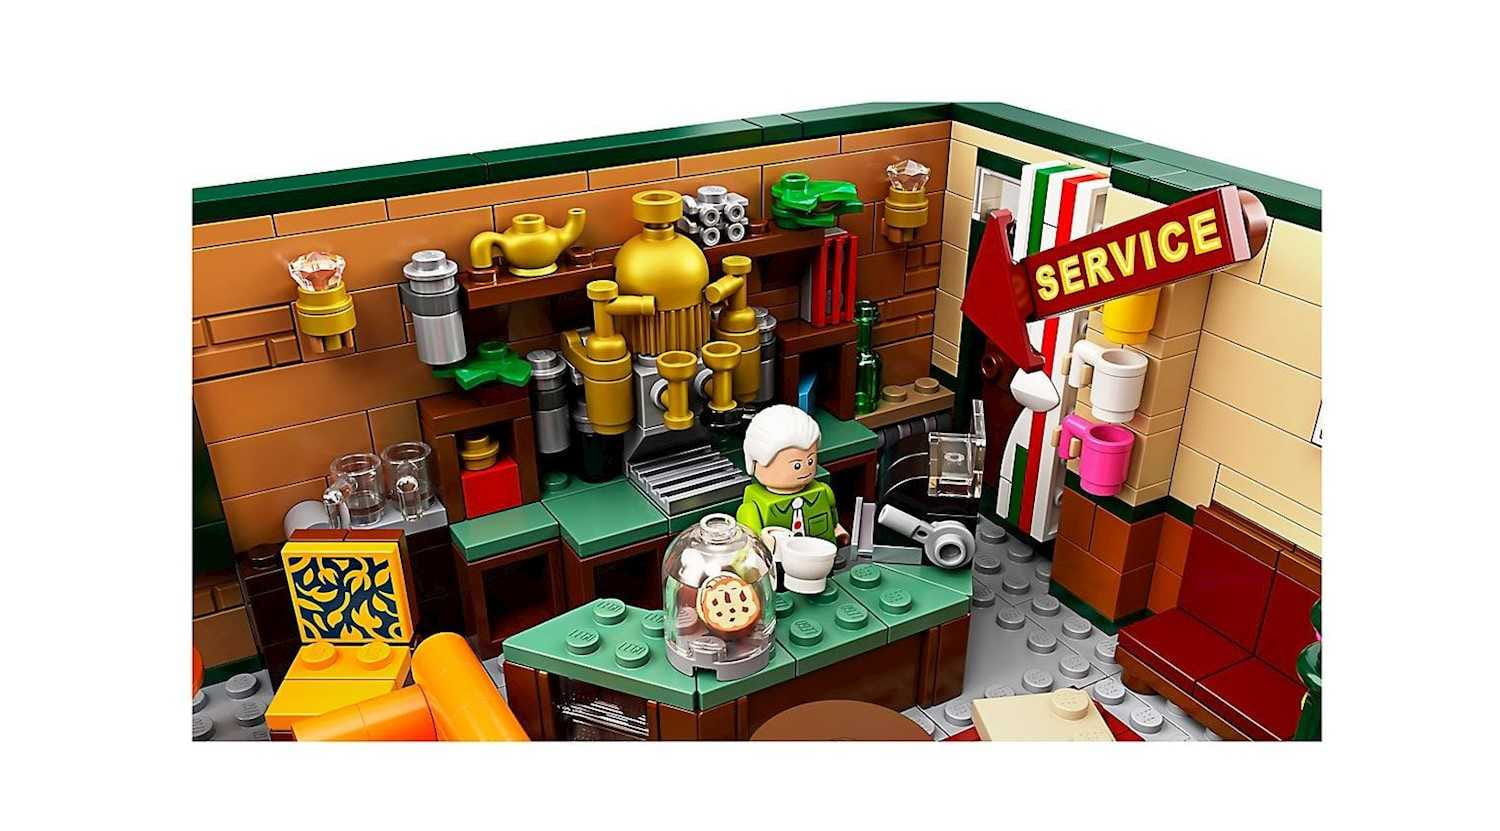 LEGO IDEAS Edition FRIENDS Central Perk Cafe Exklusiv